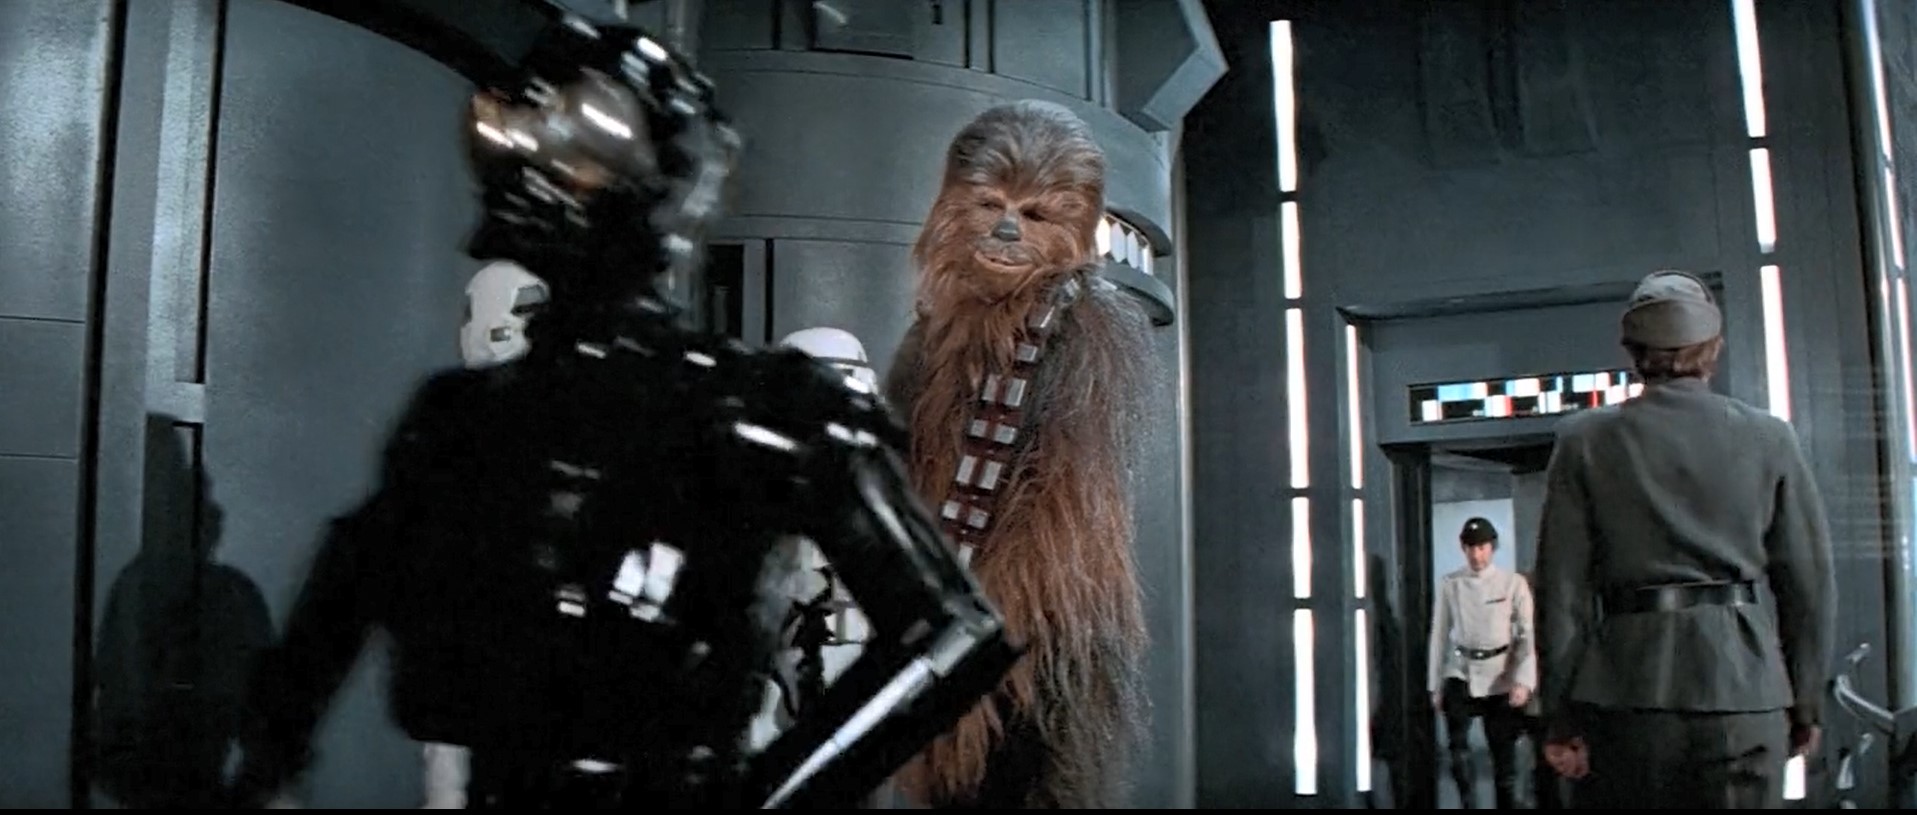 Black Death Star Droid walks past Luke, Han and Chewie on Death Star. Black droid prop.